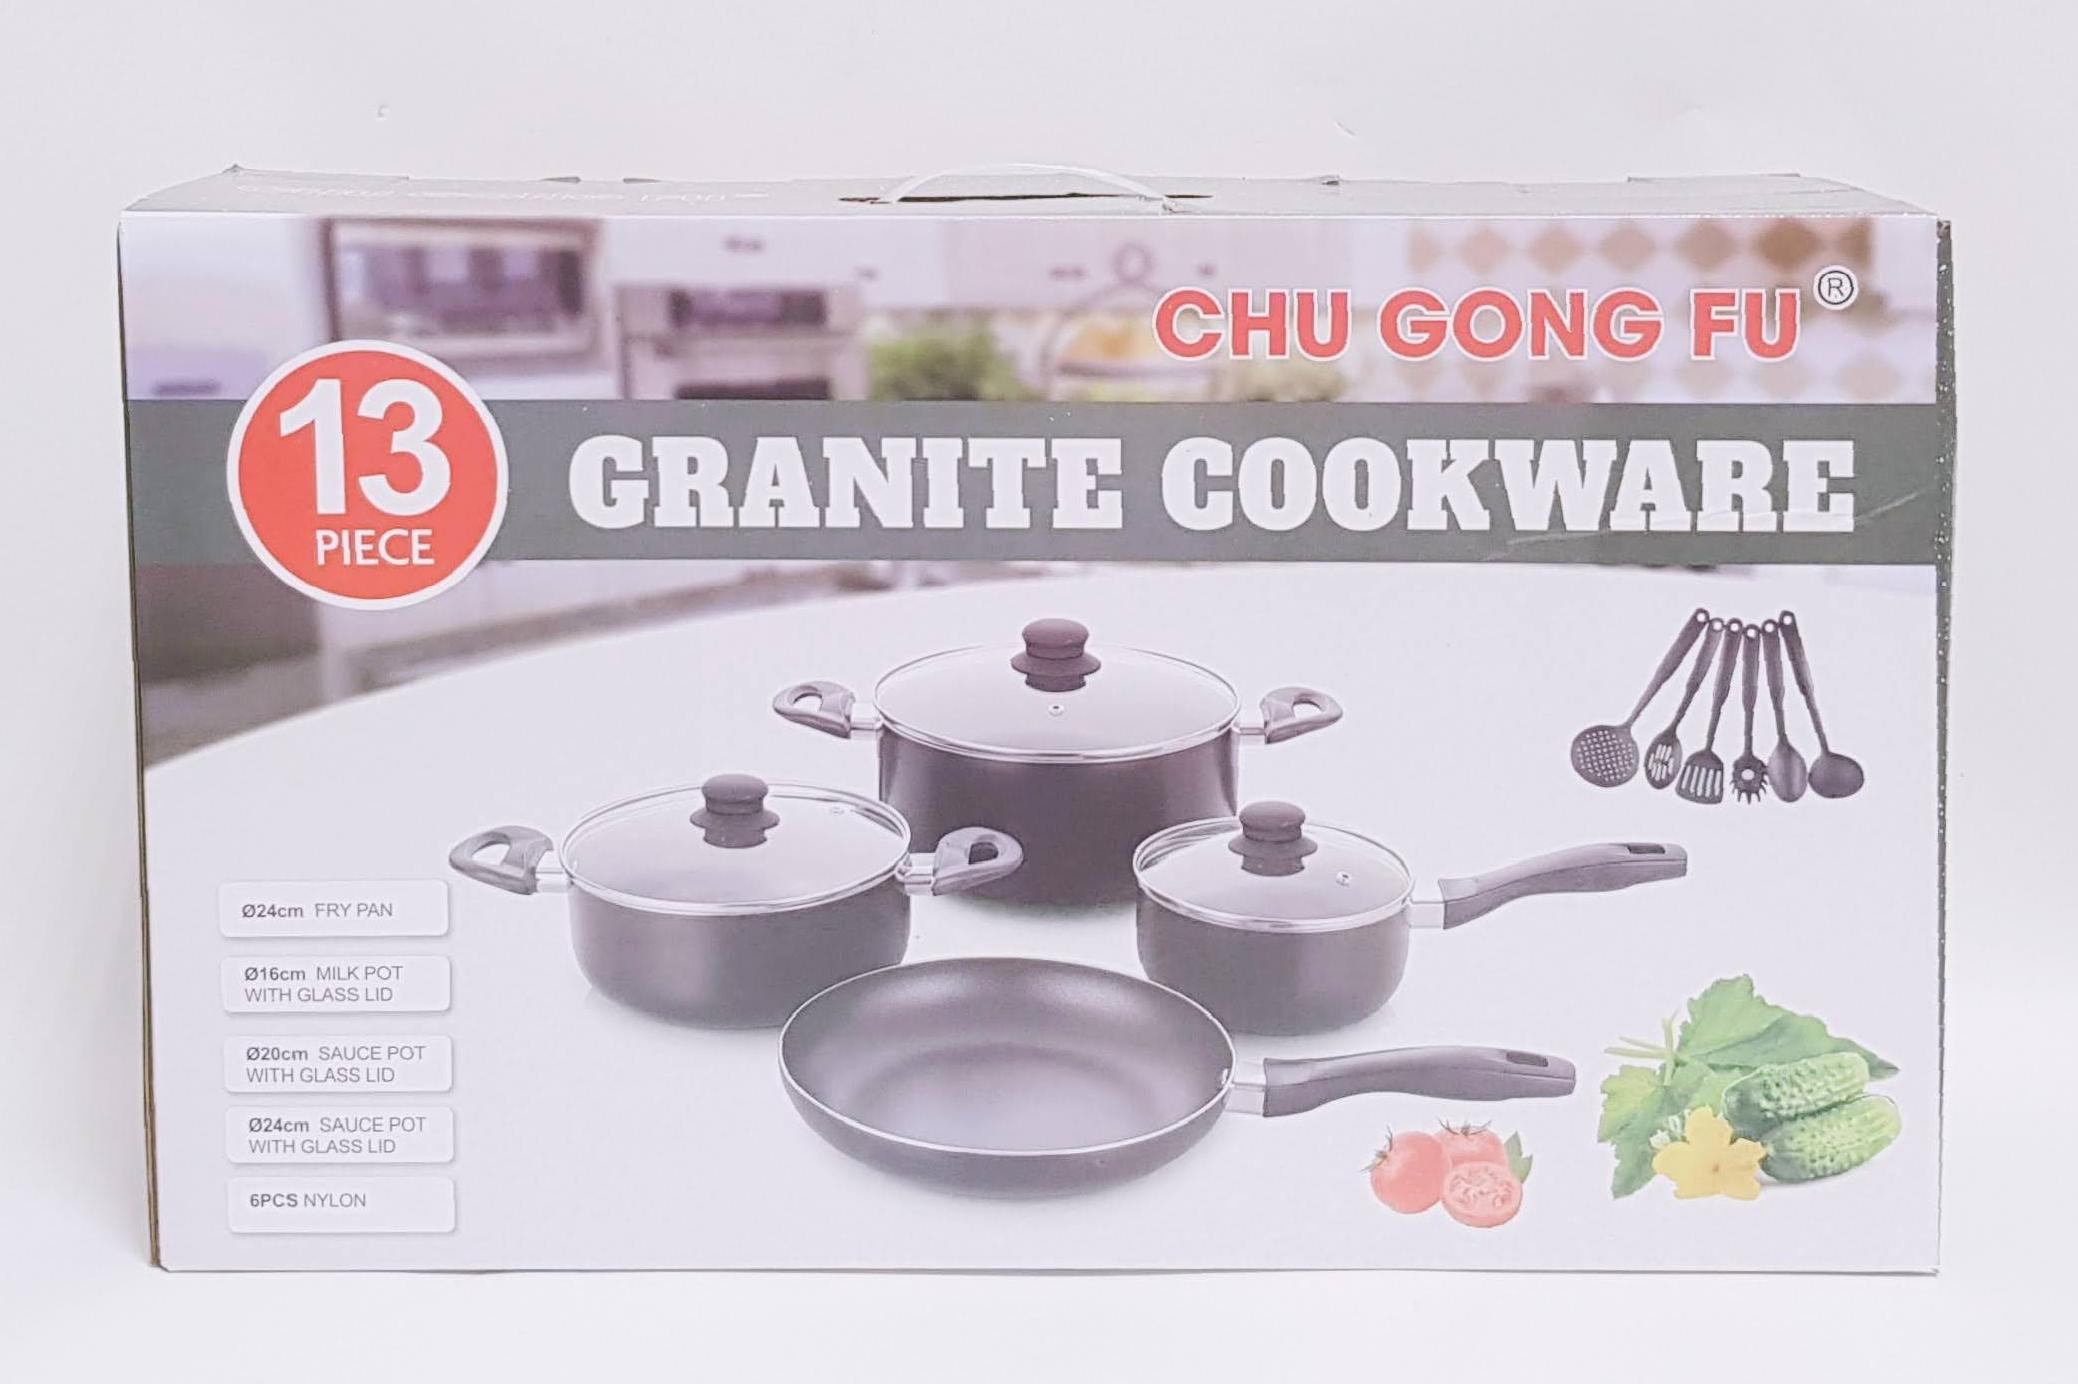 13 Piece CHU GONG FU Grantite Cookwear